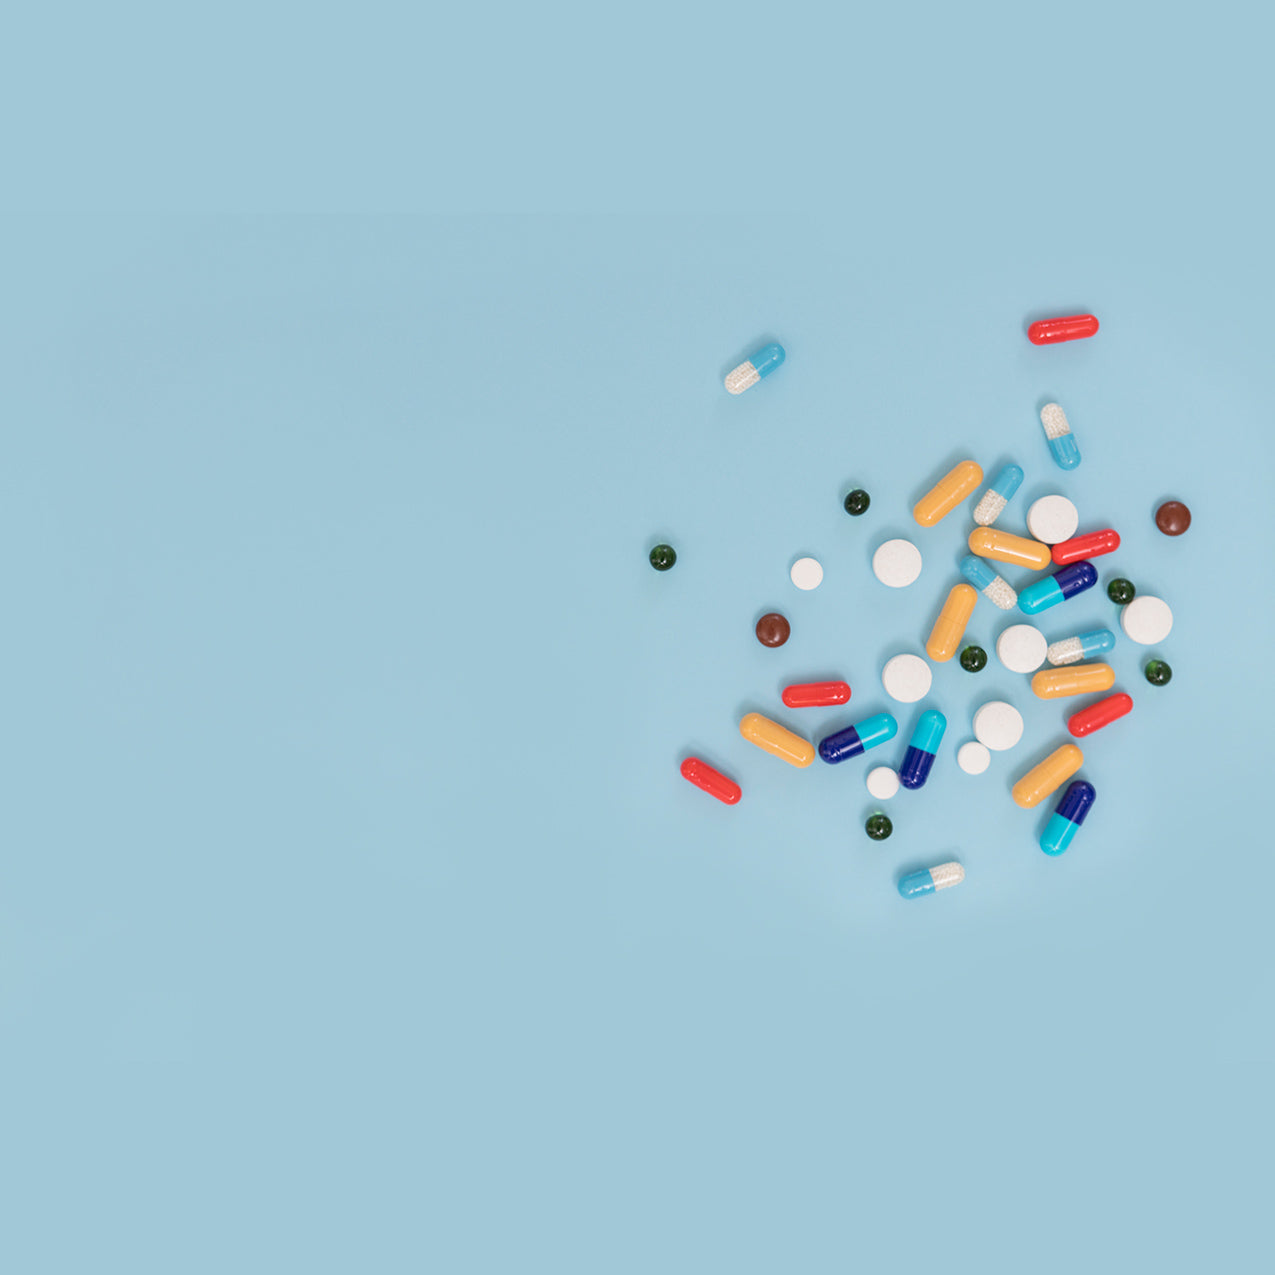 Superbugs - The End of Antibiotics?